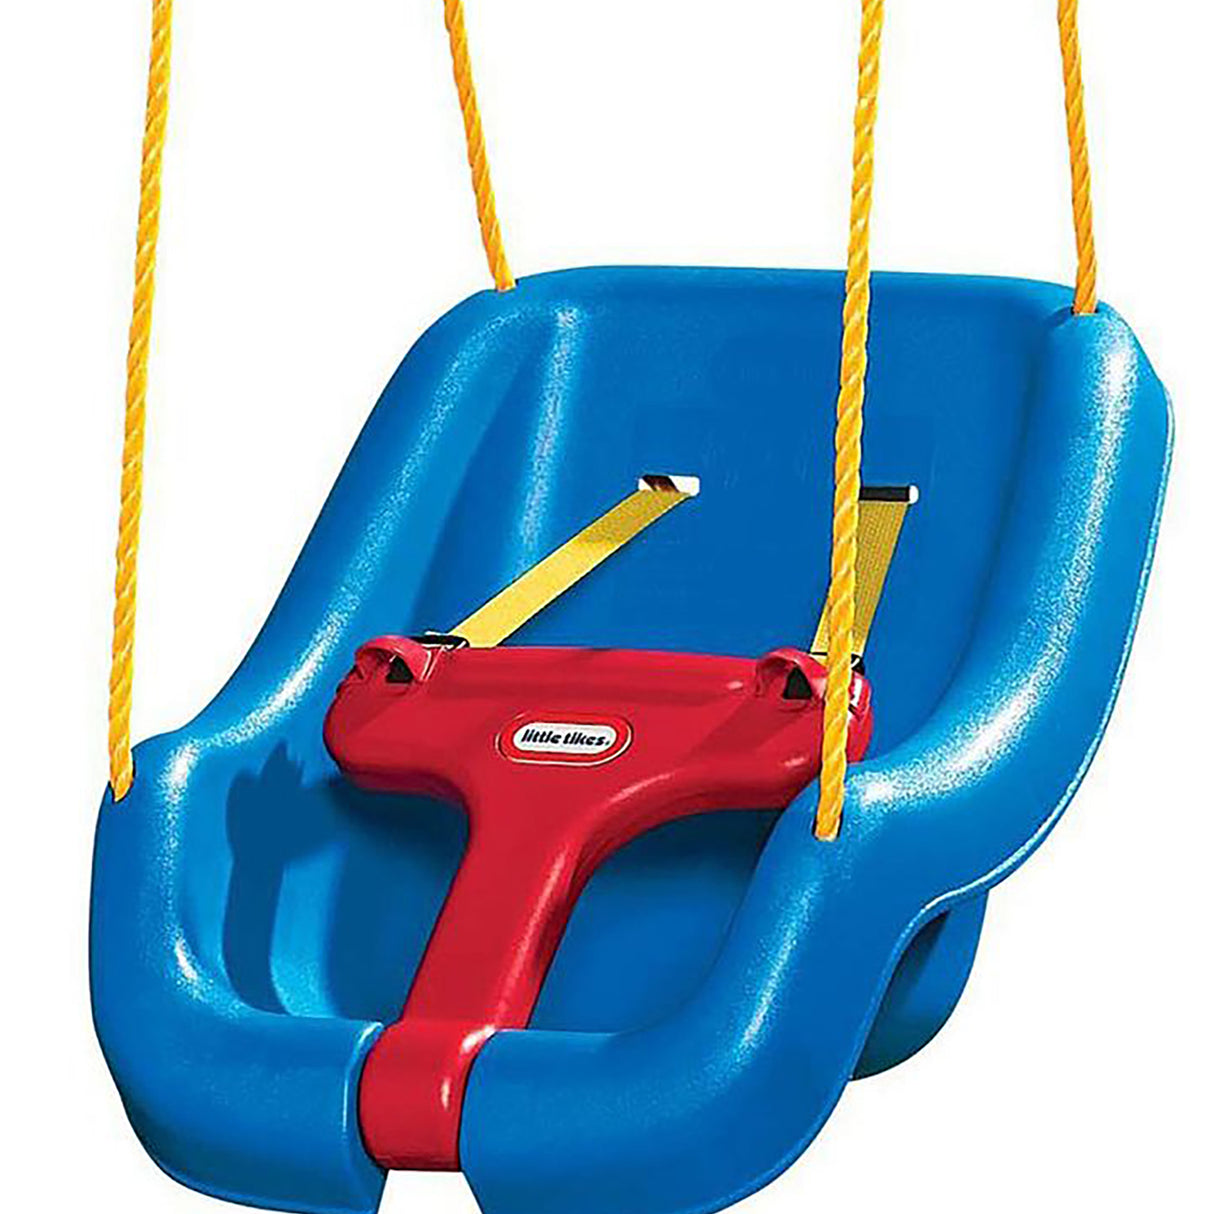 Little Tikes 2-in-1 Snug 'N Secure Swing, Blue